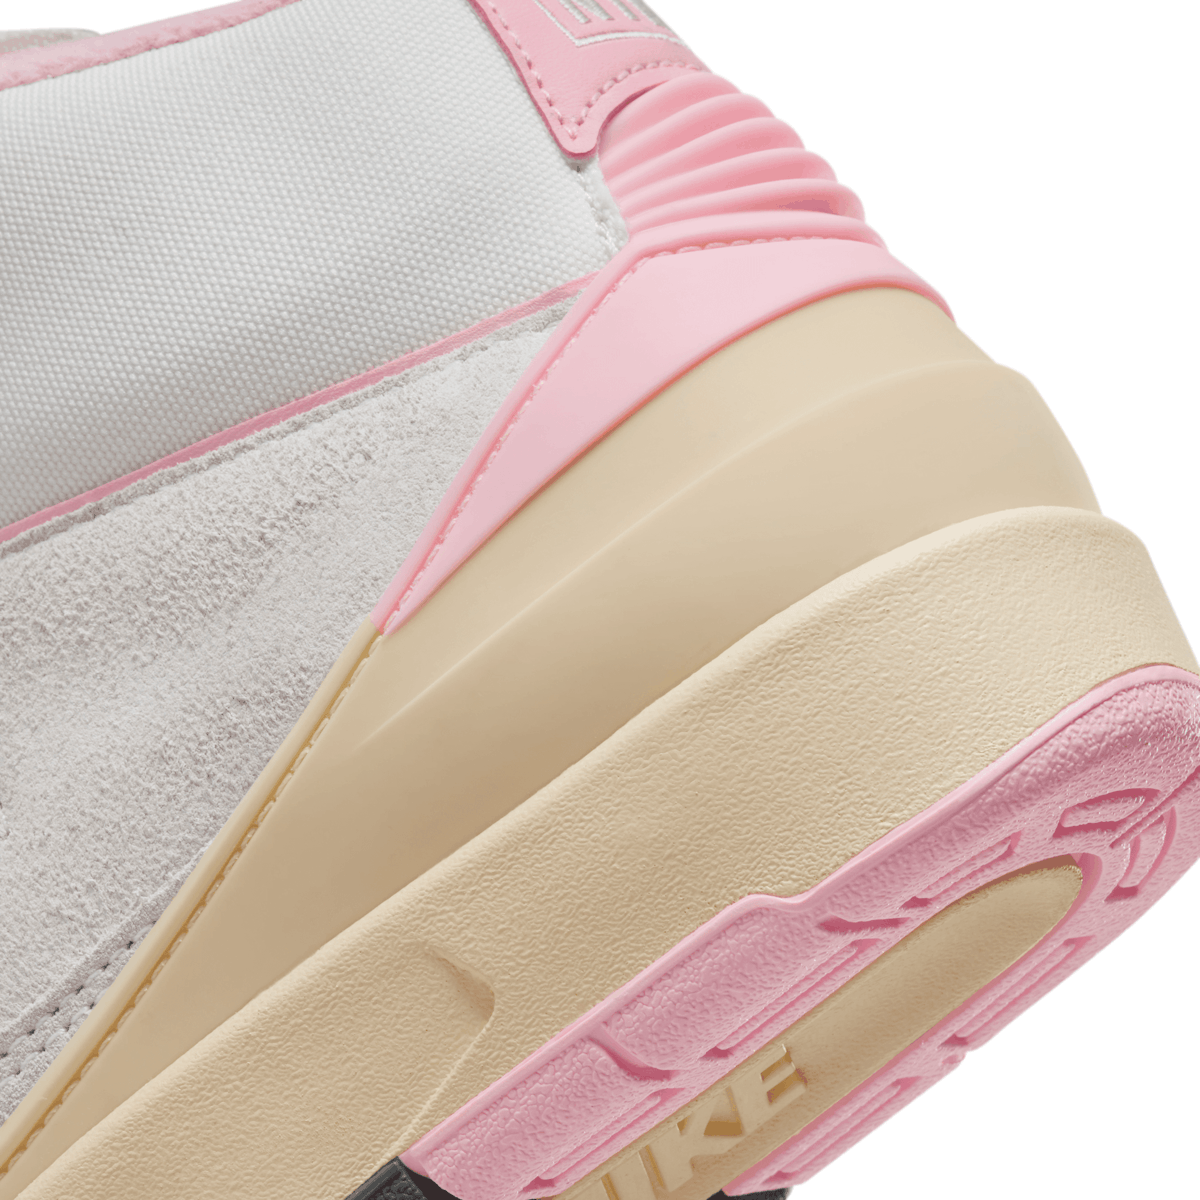 Nike airmax 720 pink - Gem